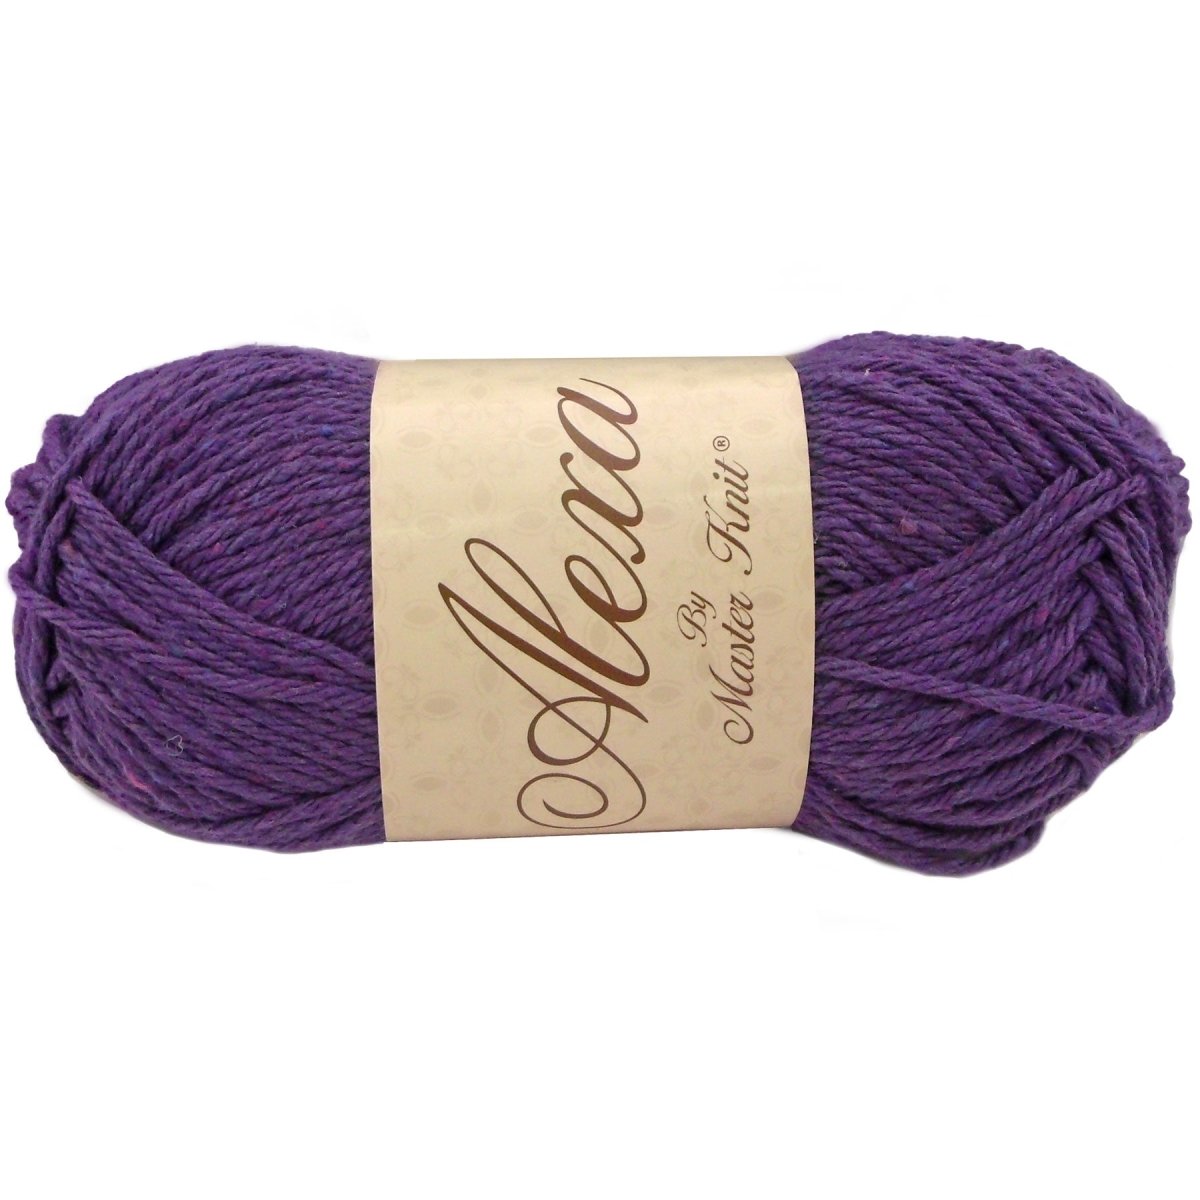 ALEXA - Crochetstores9340-168